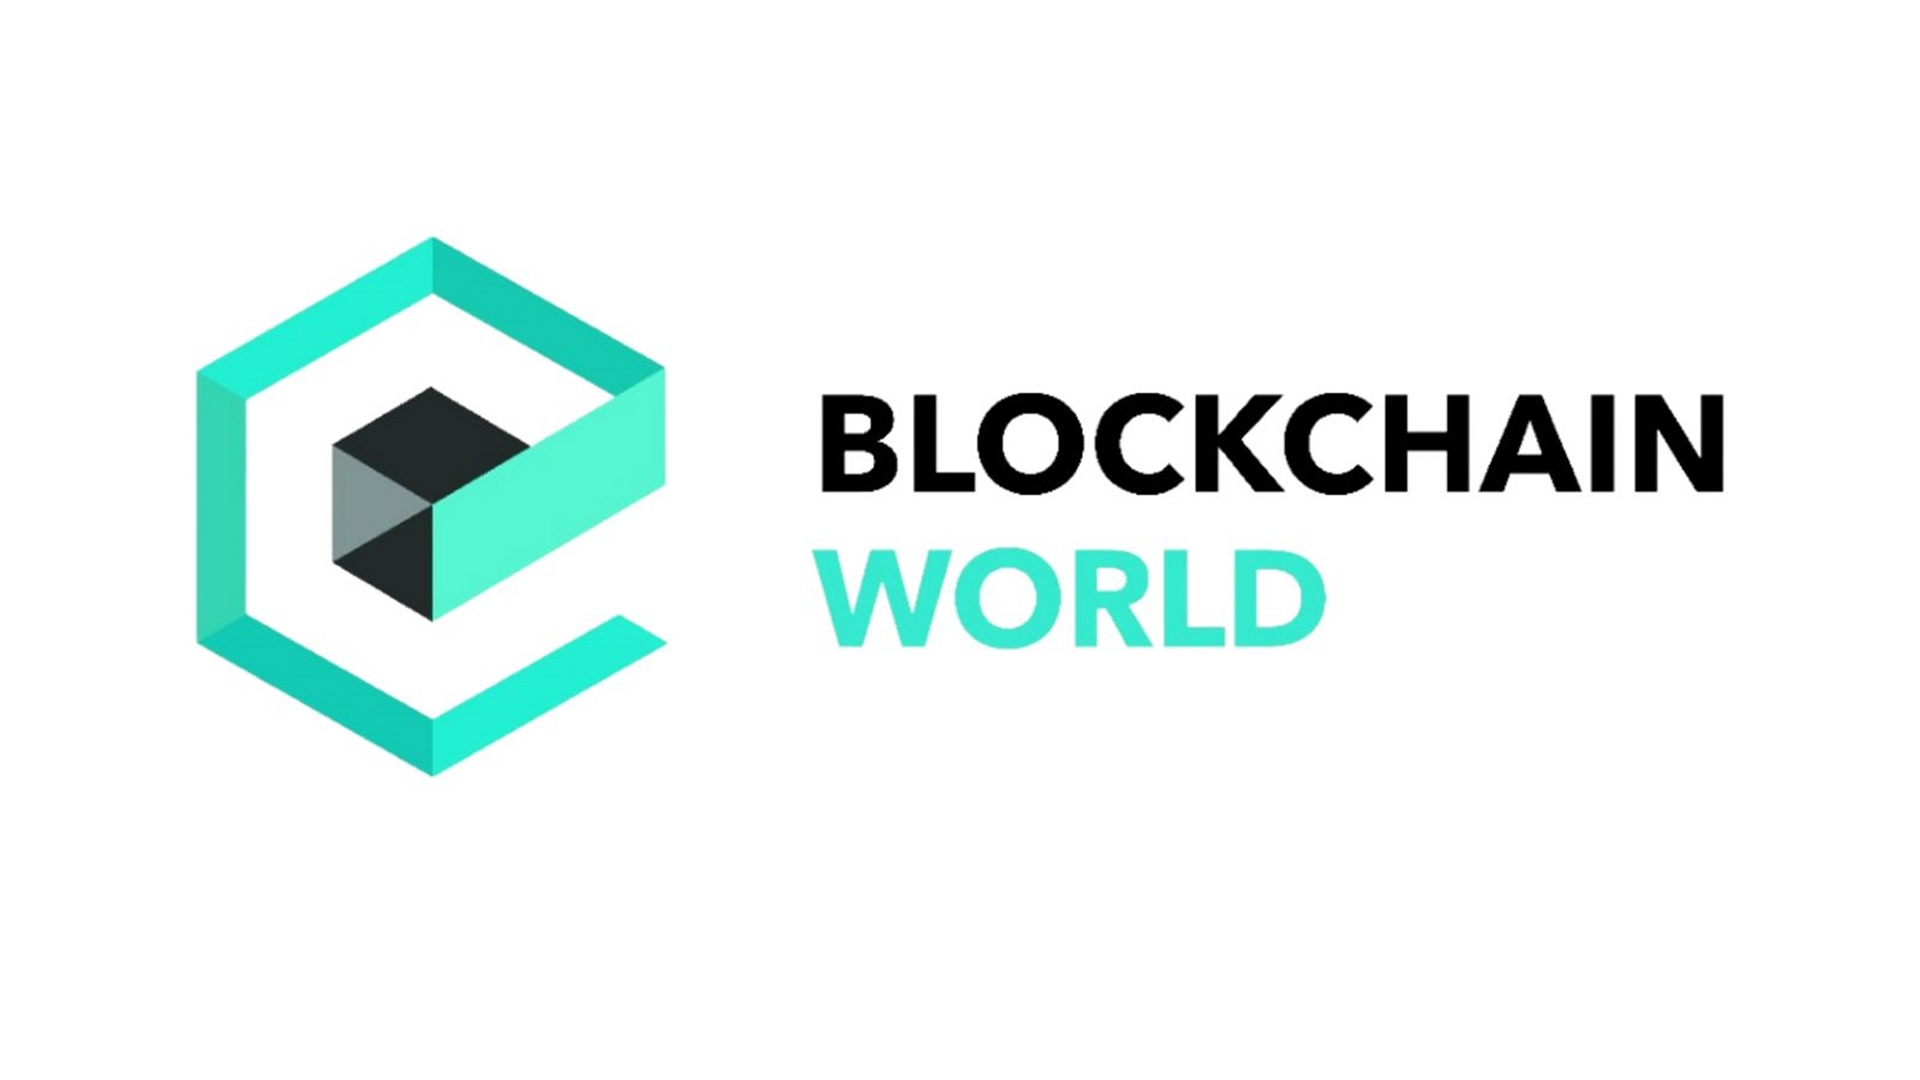 Blockchain World LOGO.jpg